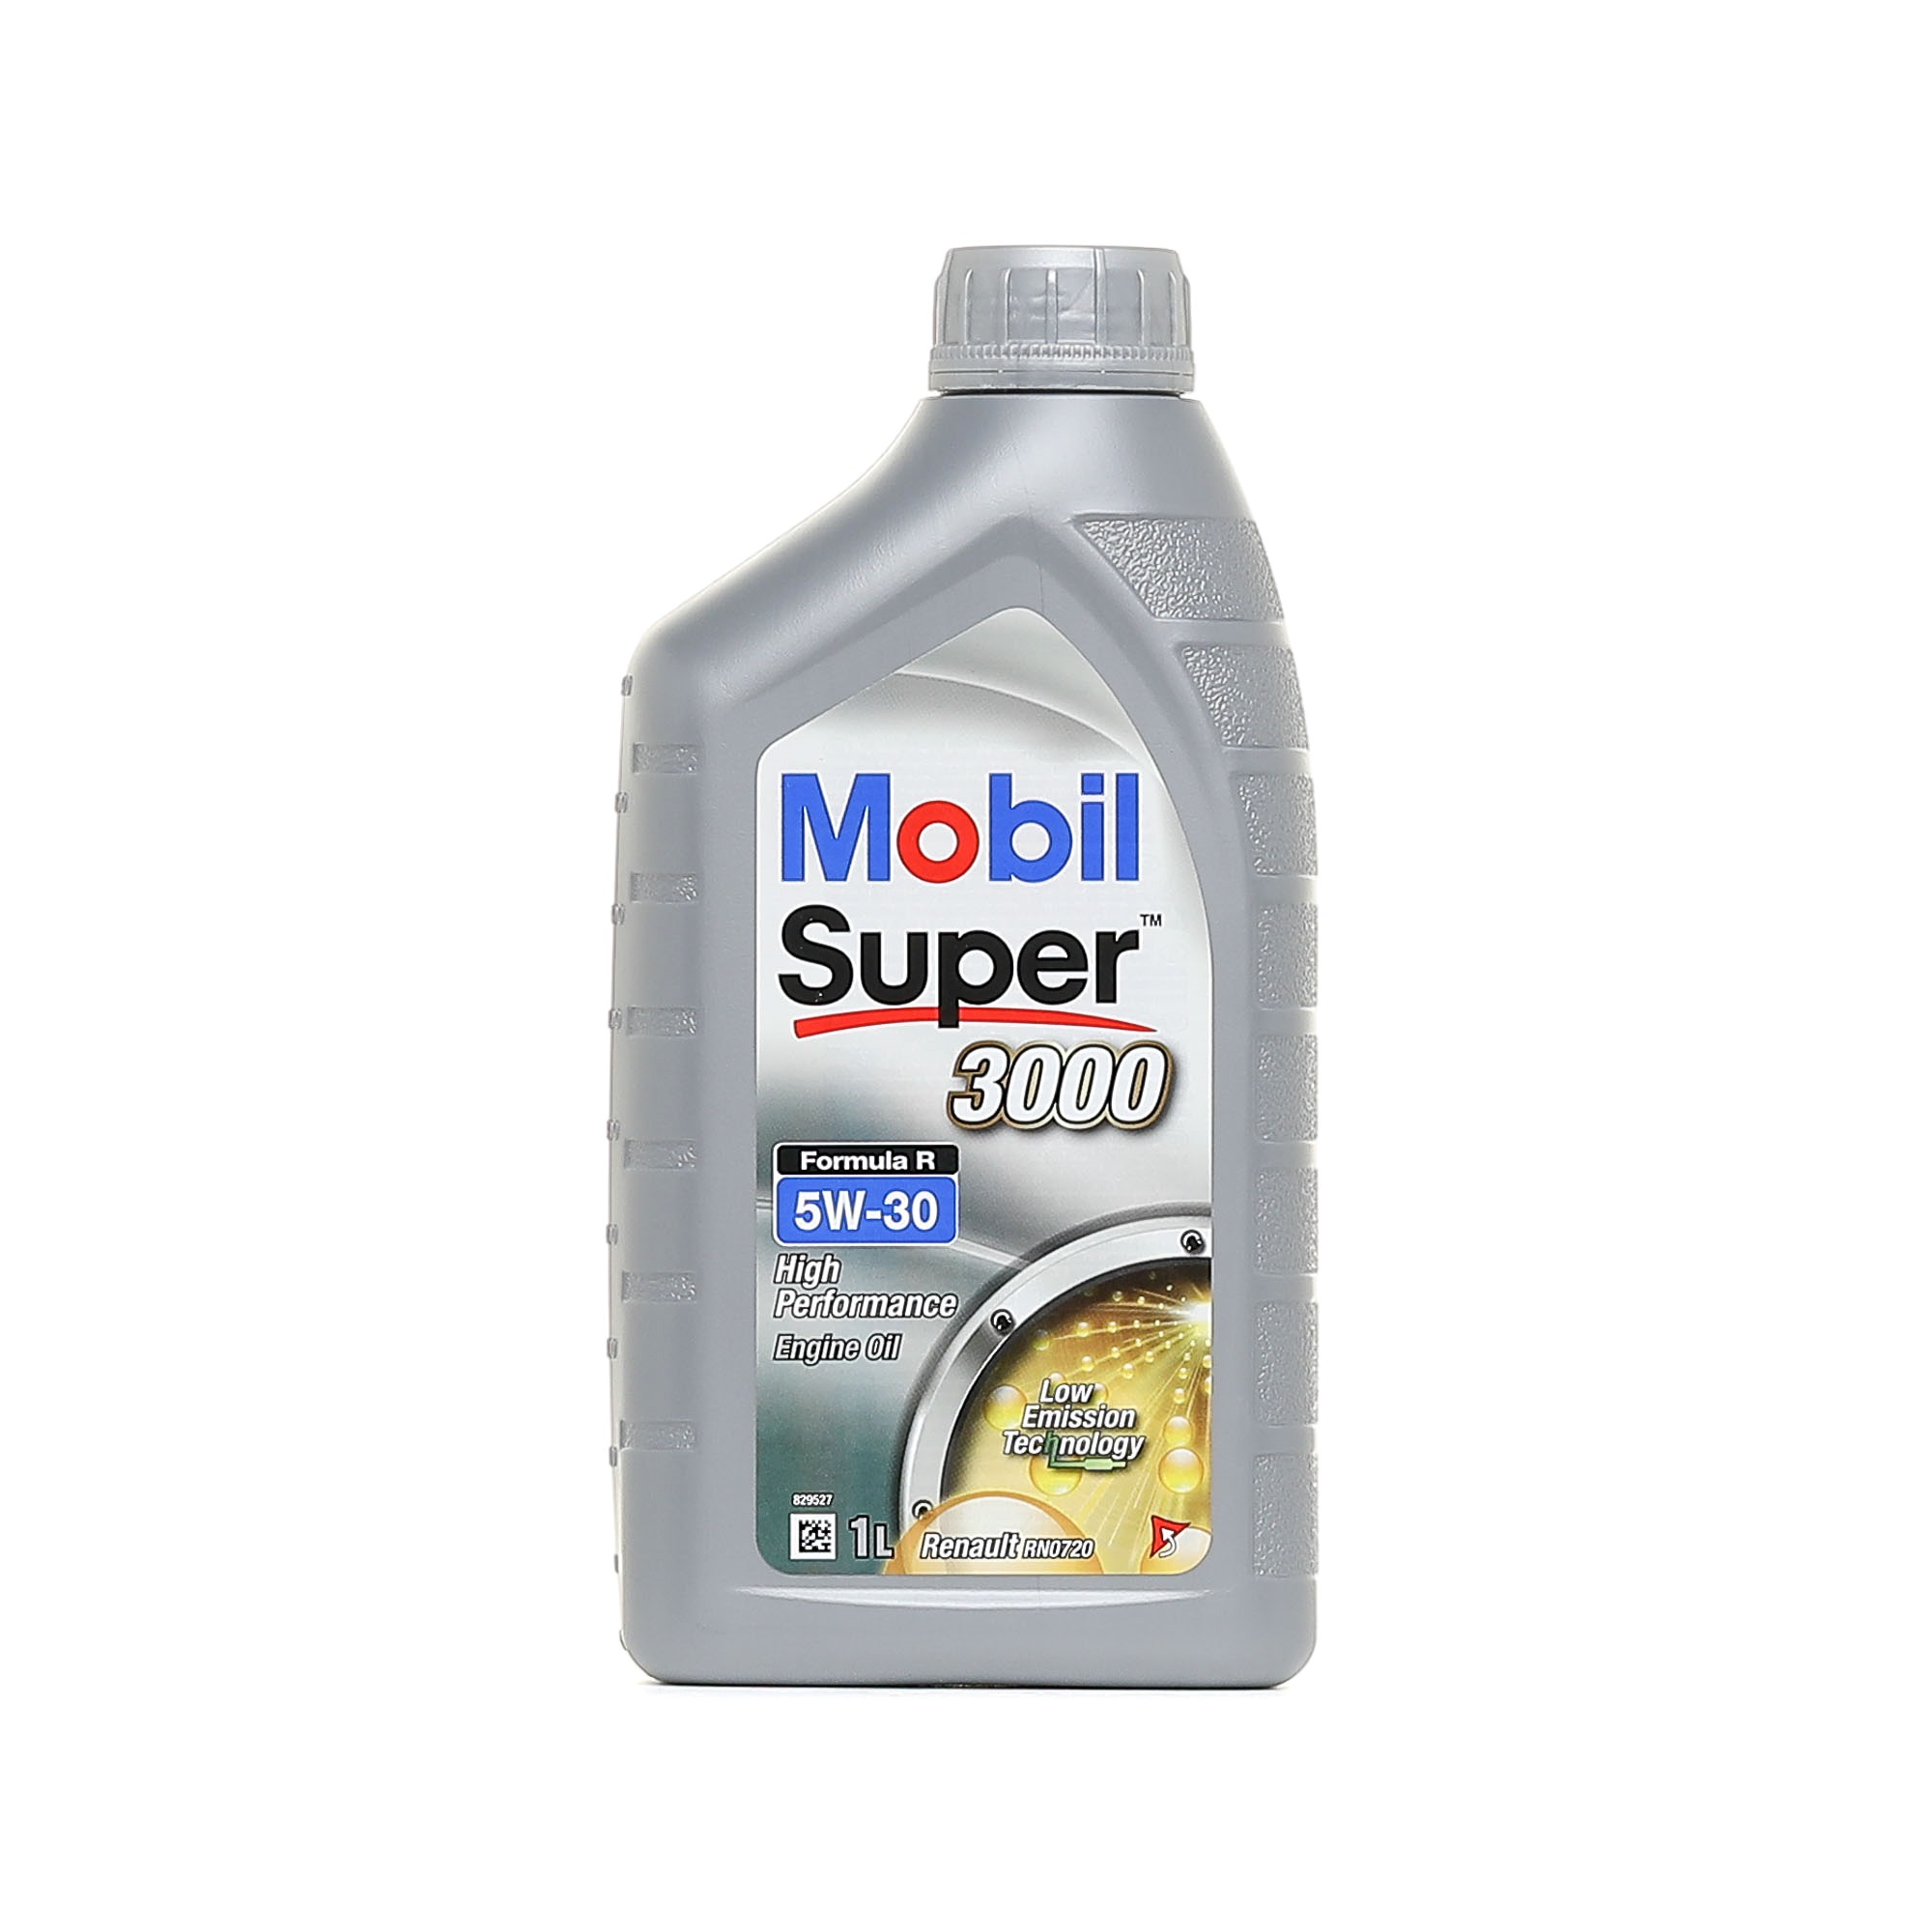 MOBIL Super, 3000 Formula R 5W-30, 1l Motor oil 154125 buy